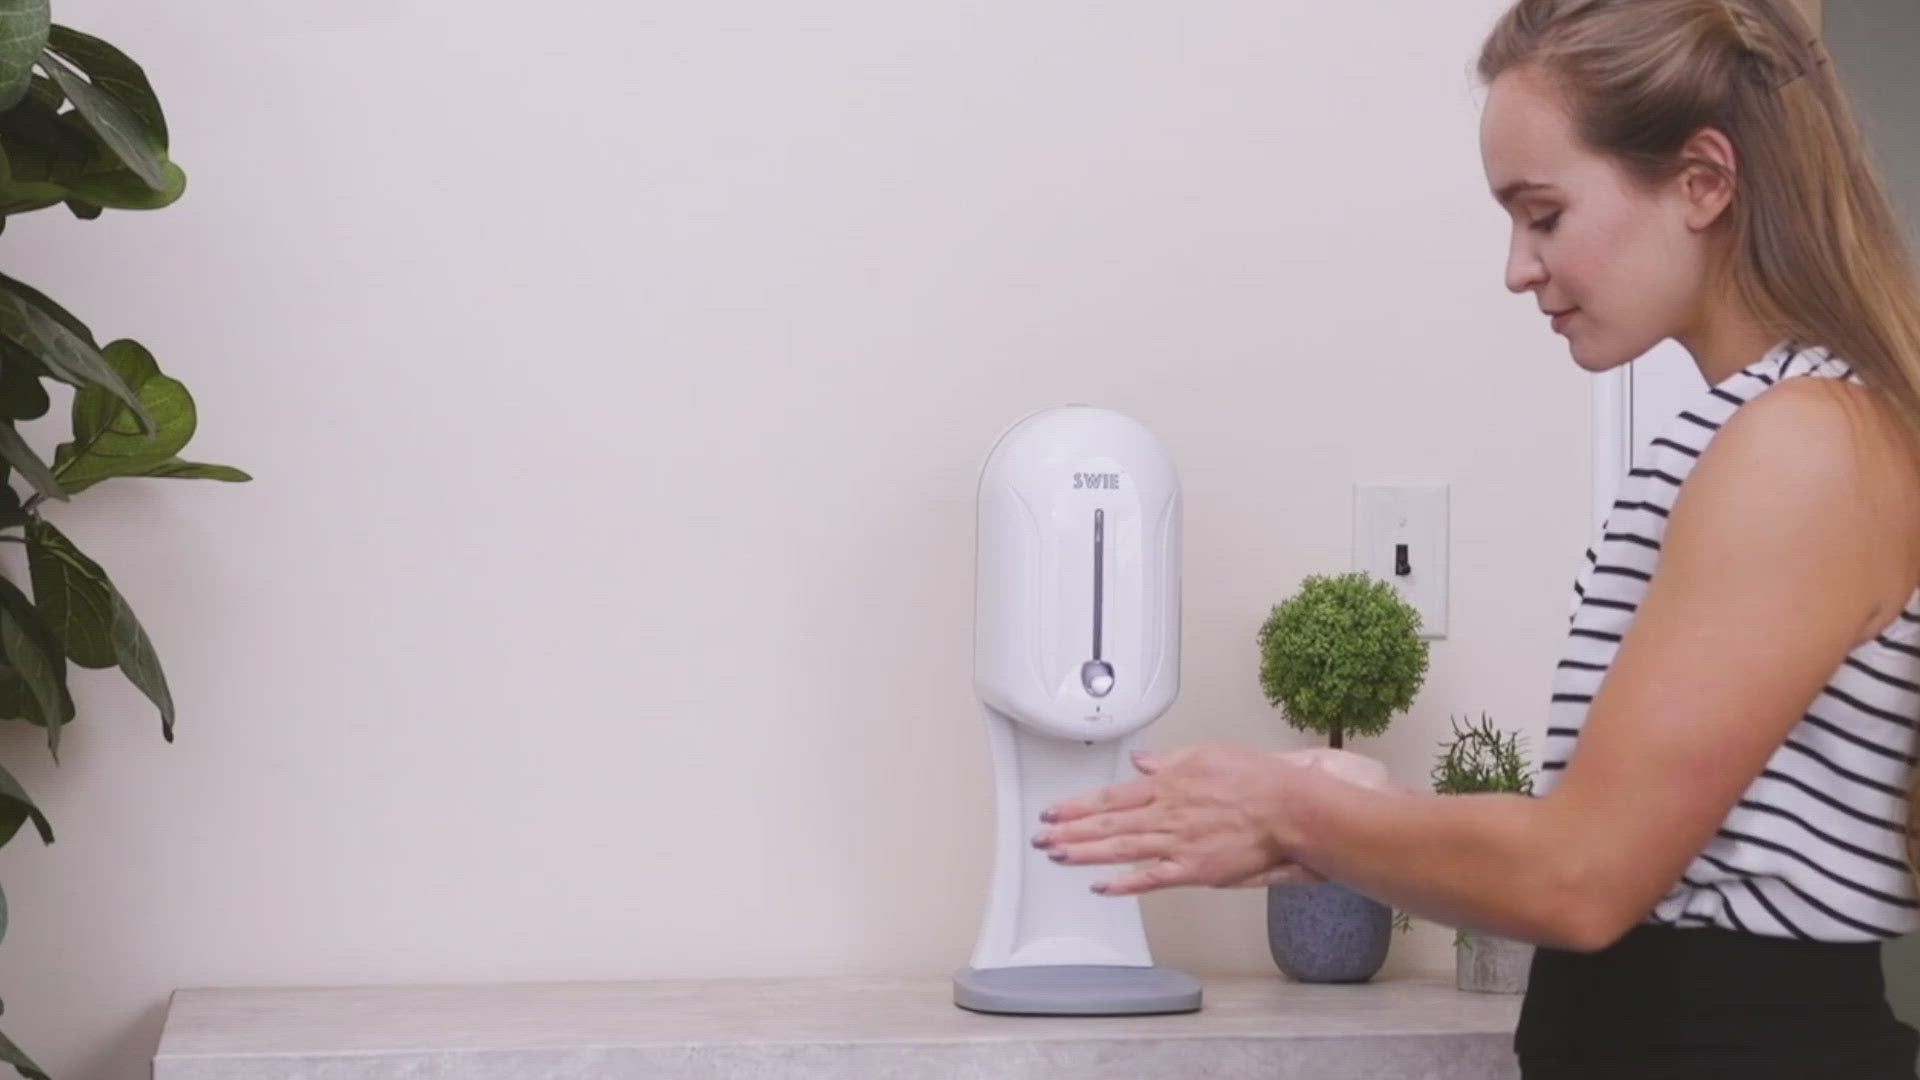 Automatic Hand Sanitizer & Soap Dispenser For Counter or Desk.